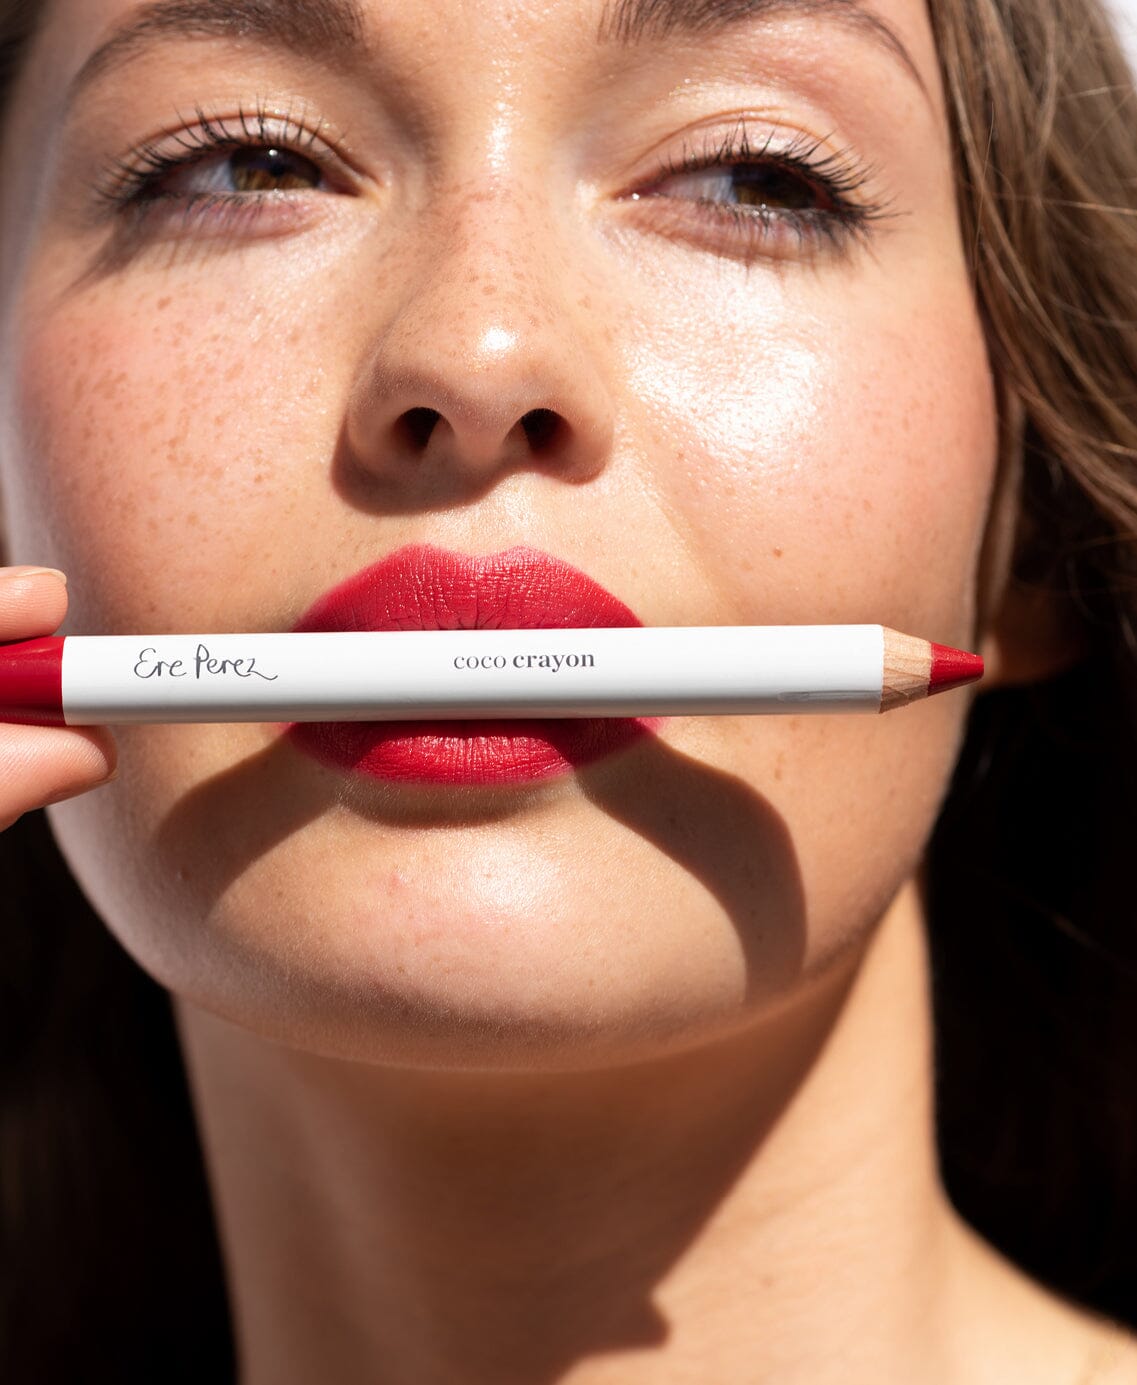 Coco Crayon (+ weitere Farben) Lippenstift Ere Perez - Genuine Selection